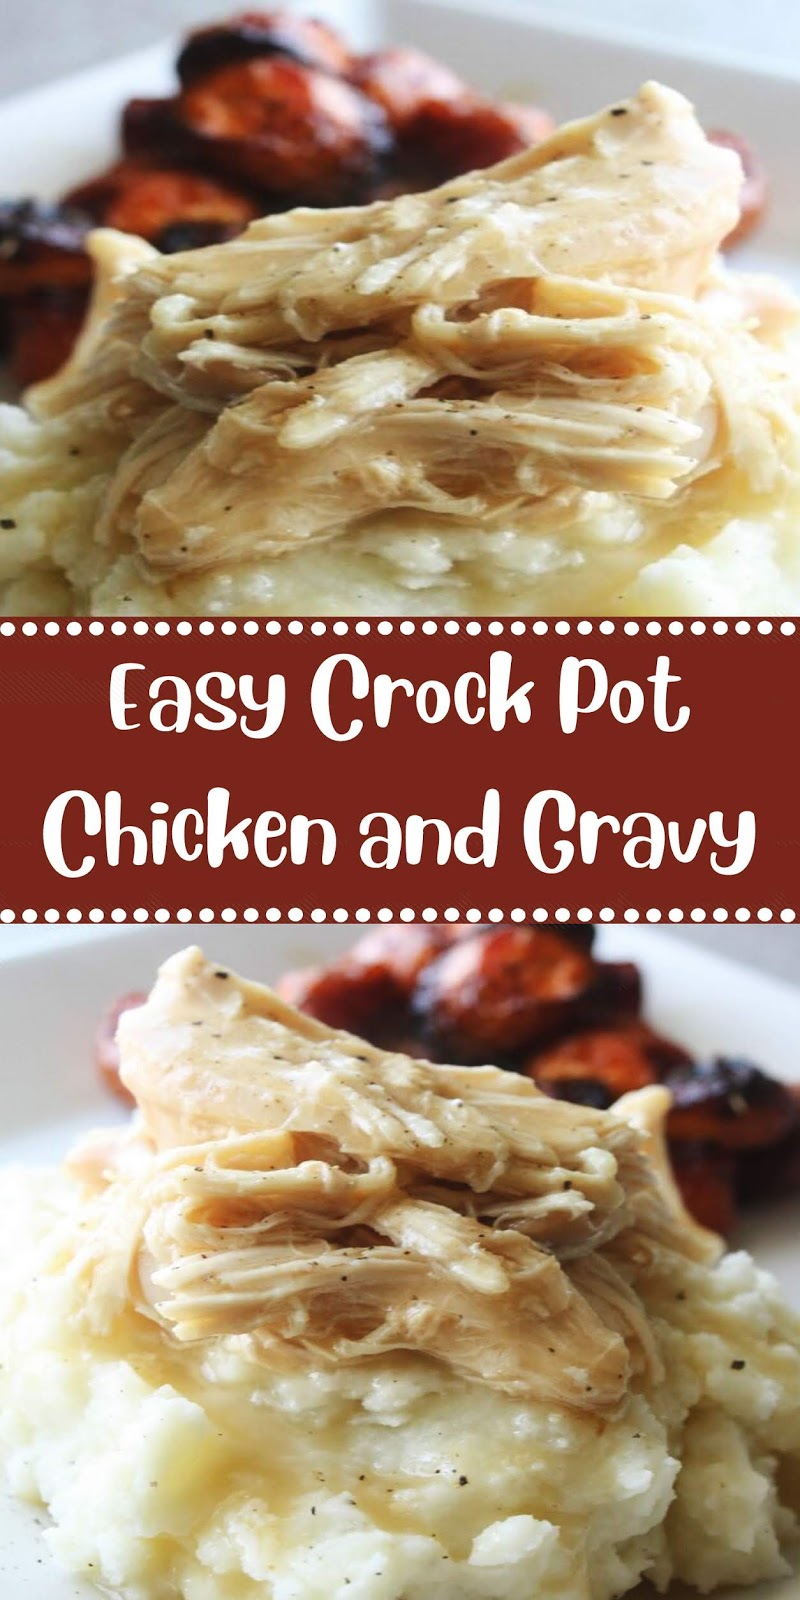 Easy Crock Pot Chicken and Gravy - Recipe Kuenak